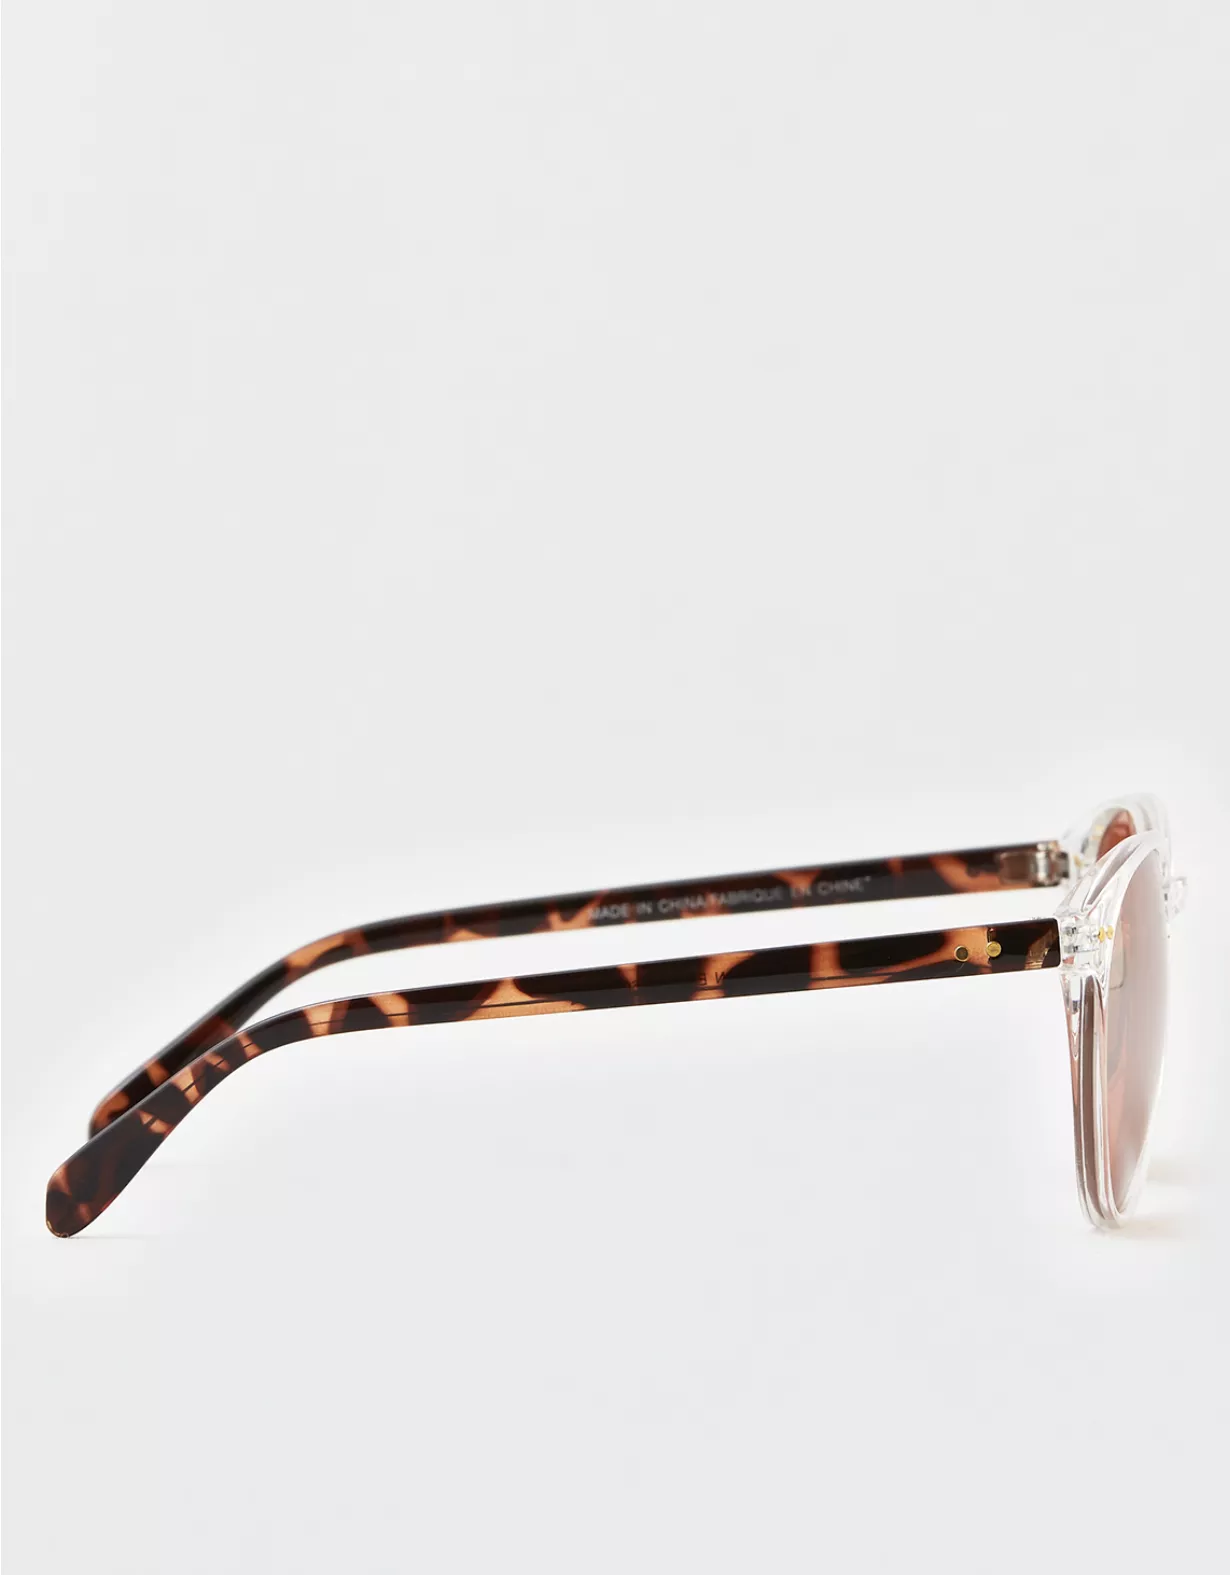 AEO Silver Flash Lens Sunglasses